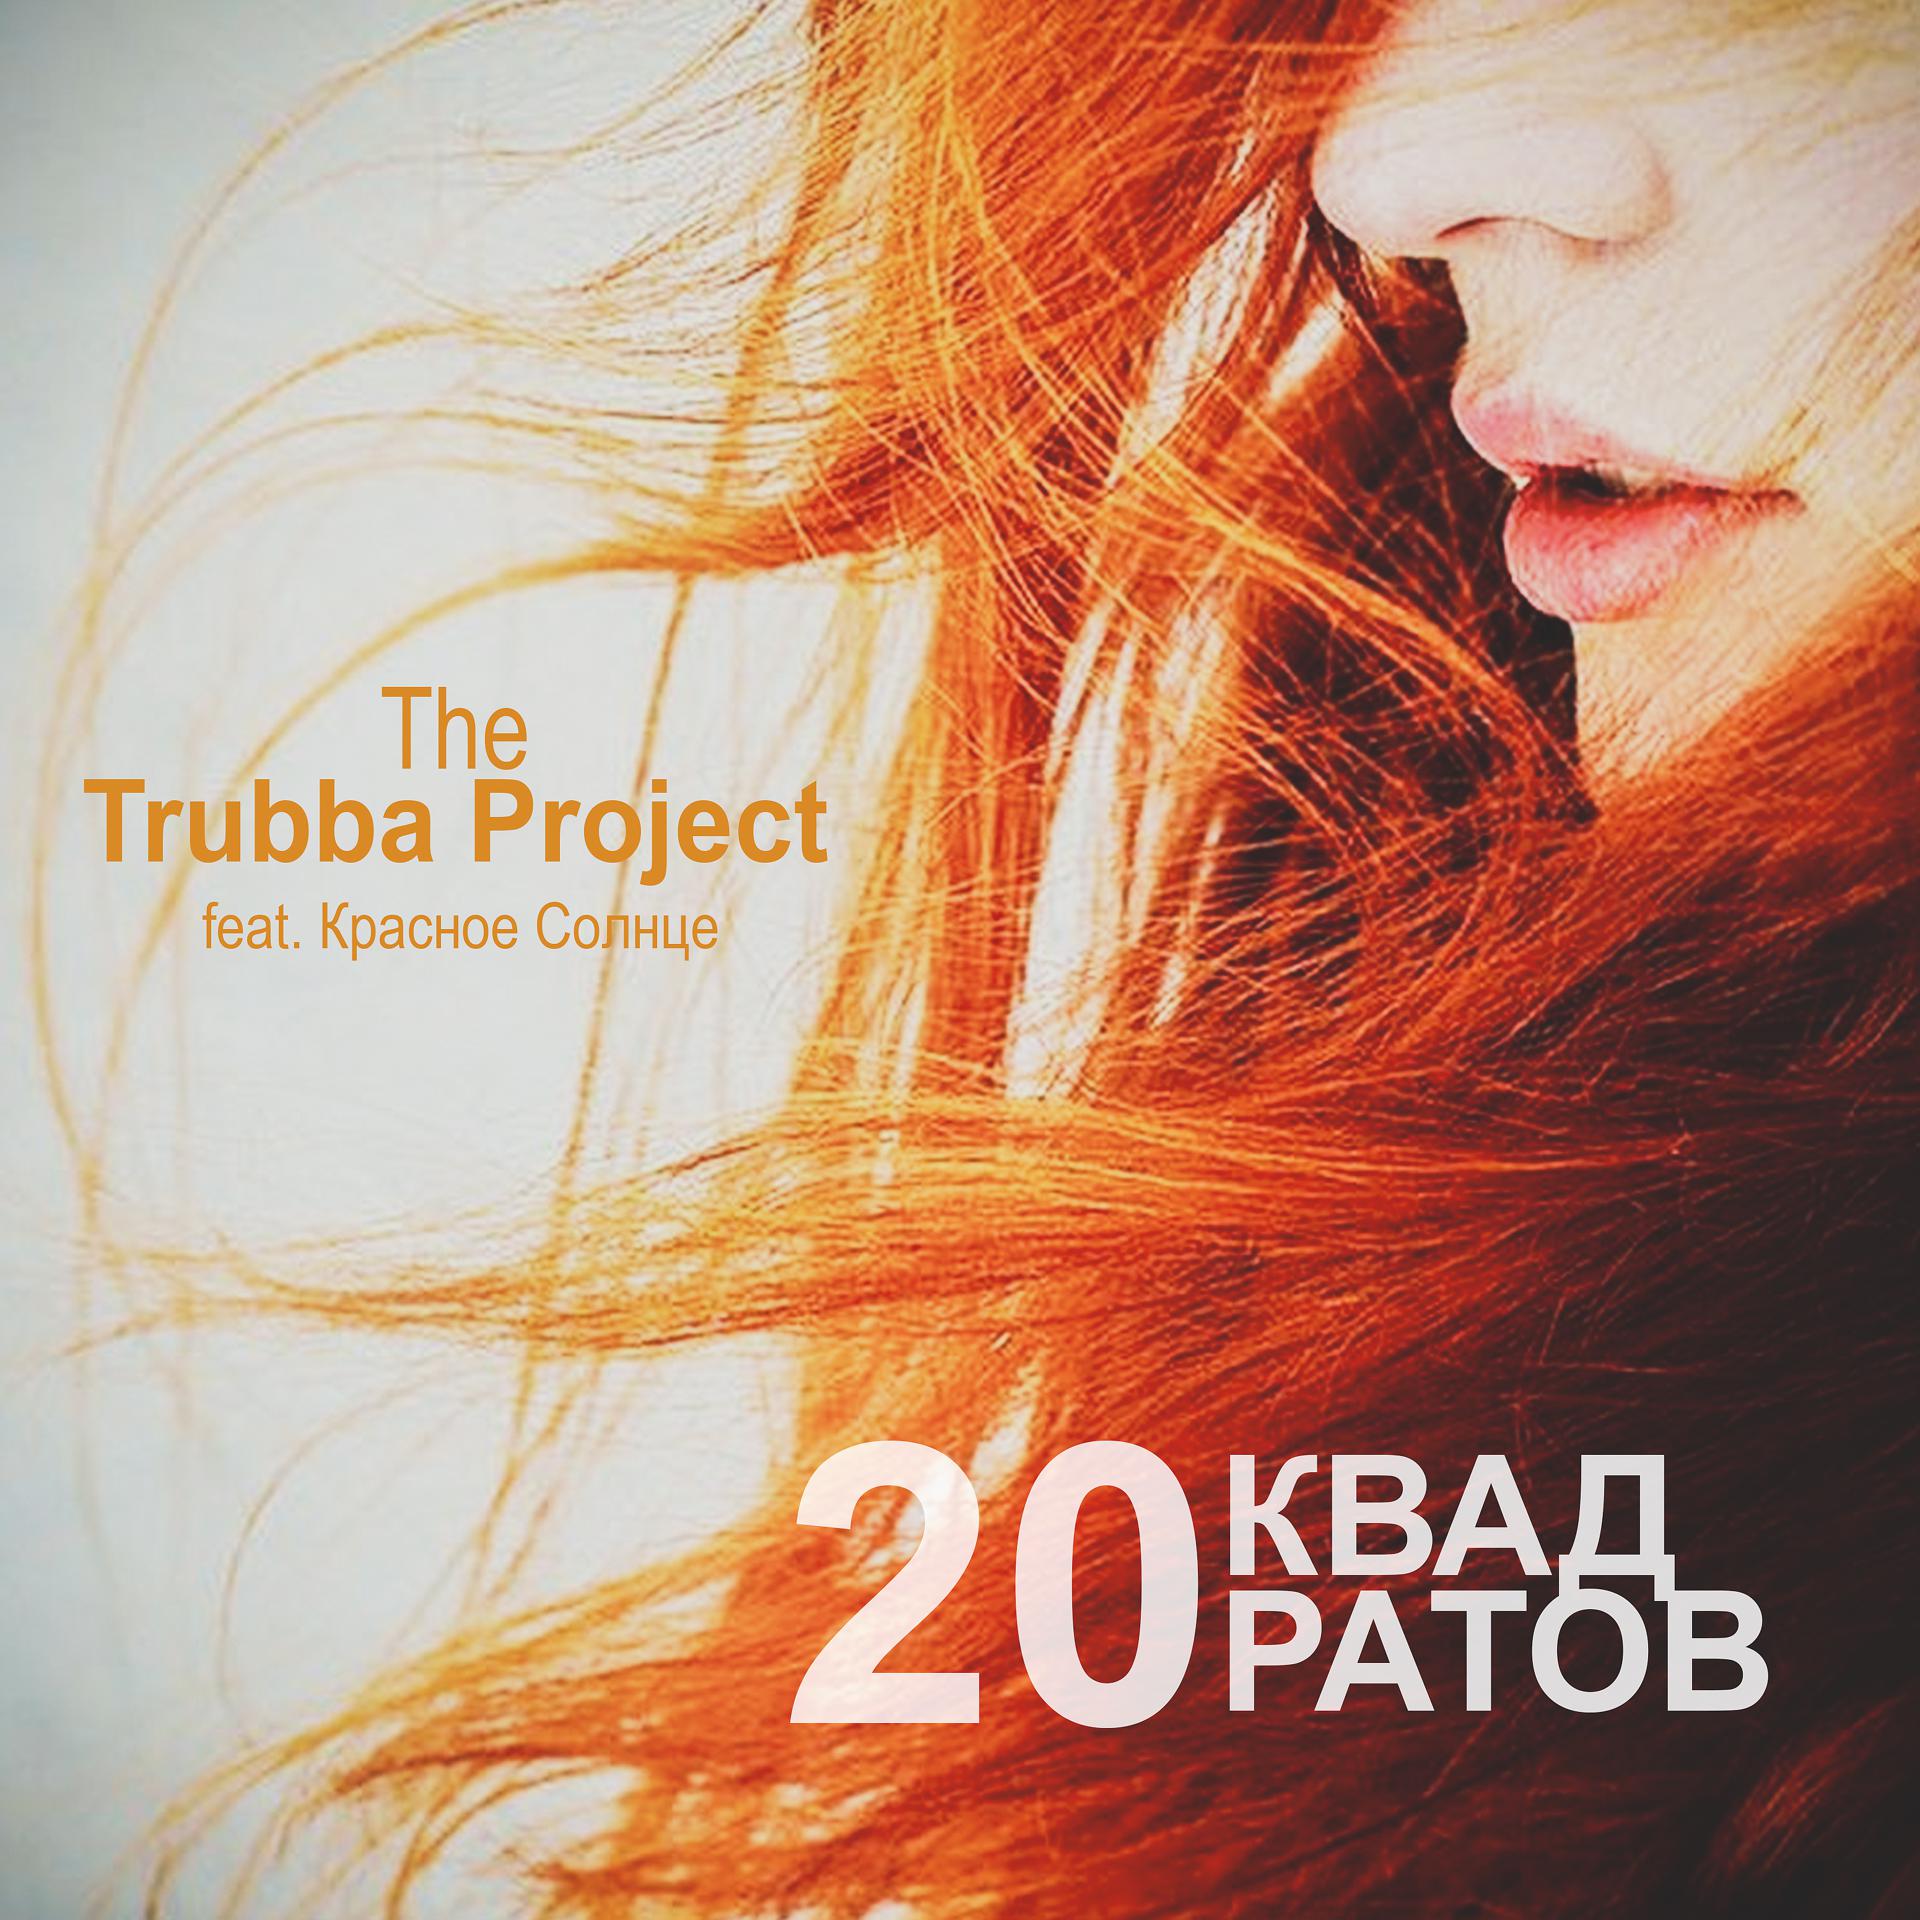 The Trubba Project.